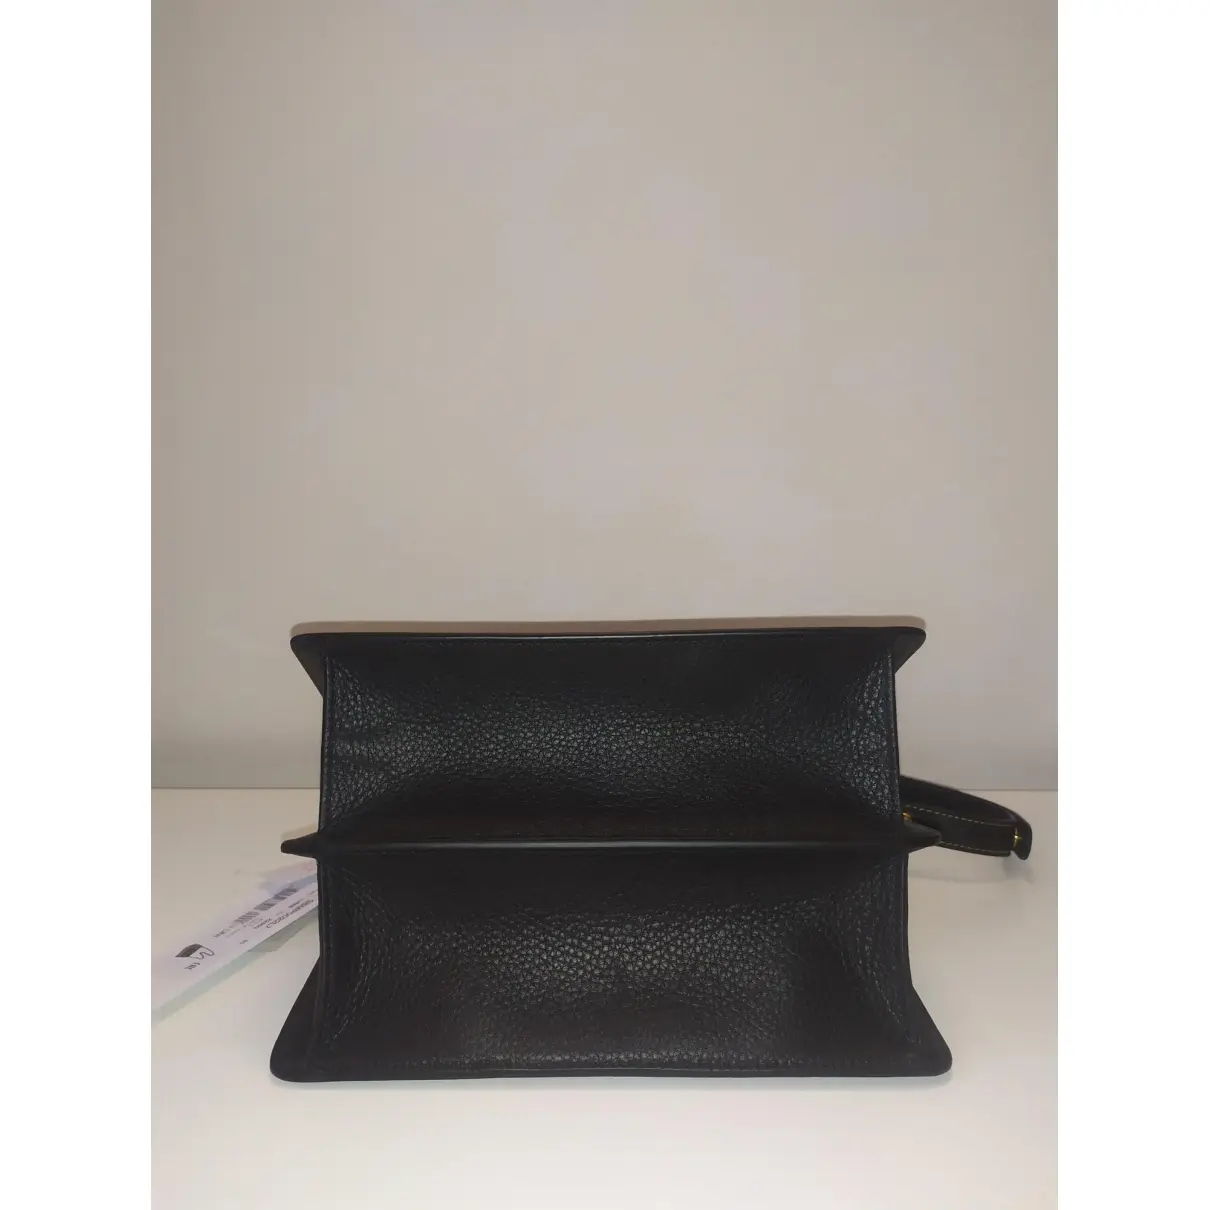 Trunk leather handbag Marni